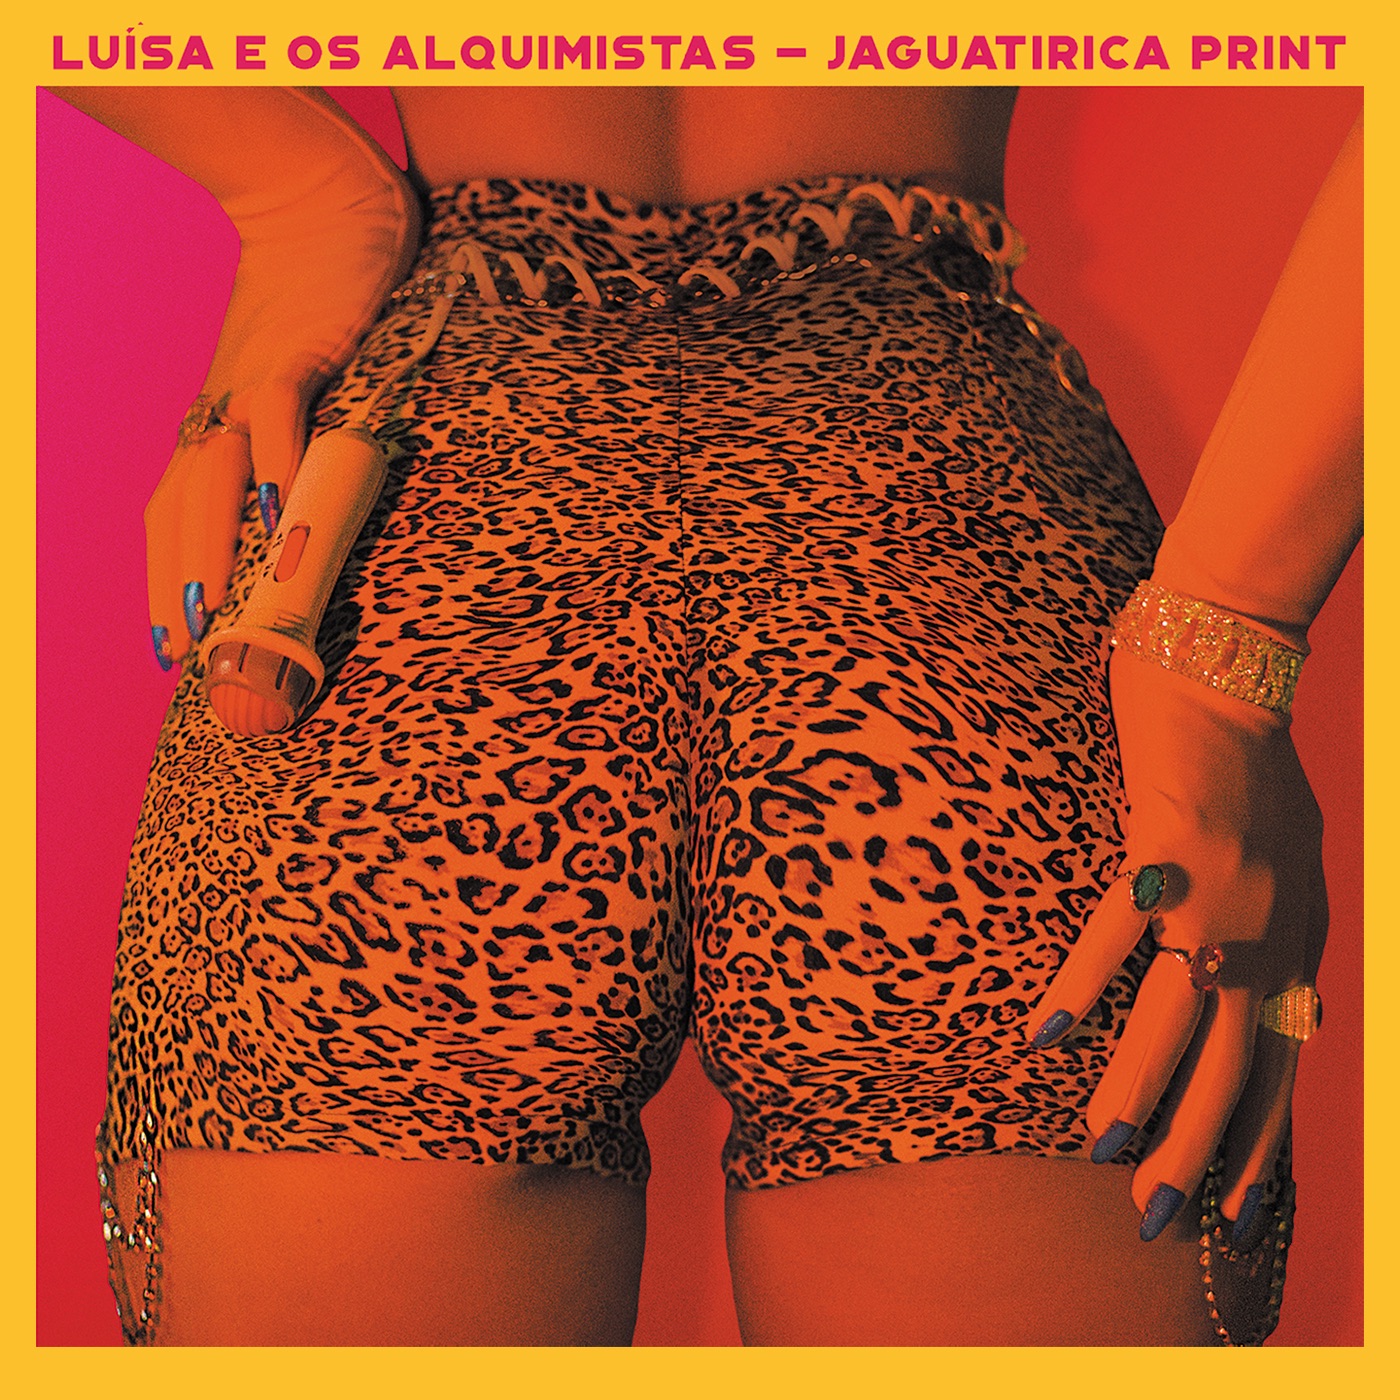 Jaguatirica Print by Luísa e os Alquimistas, Jamila, Sinta a Liga Crew, Jéssica Caitano, Jaguatirica Print